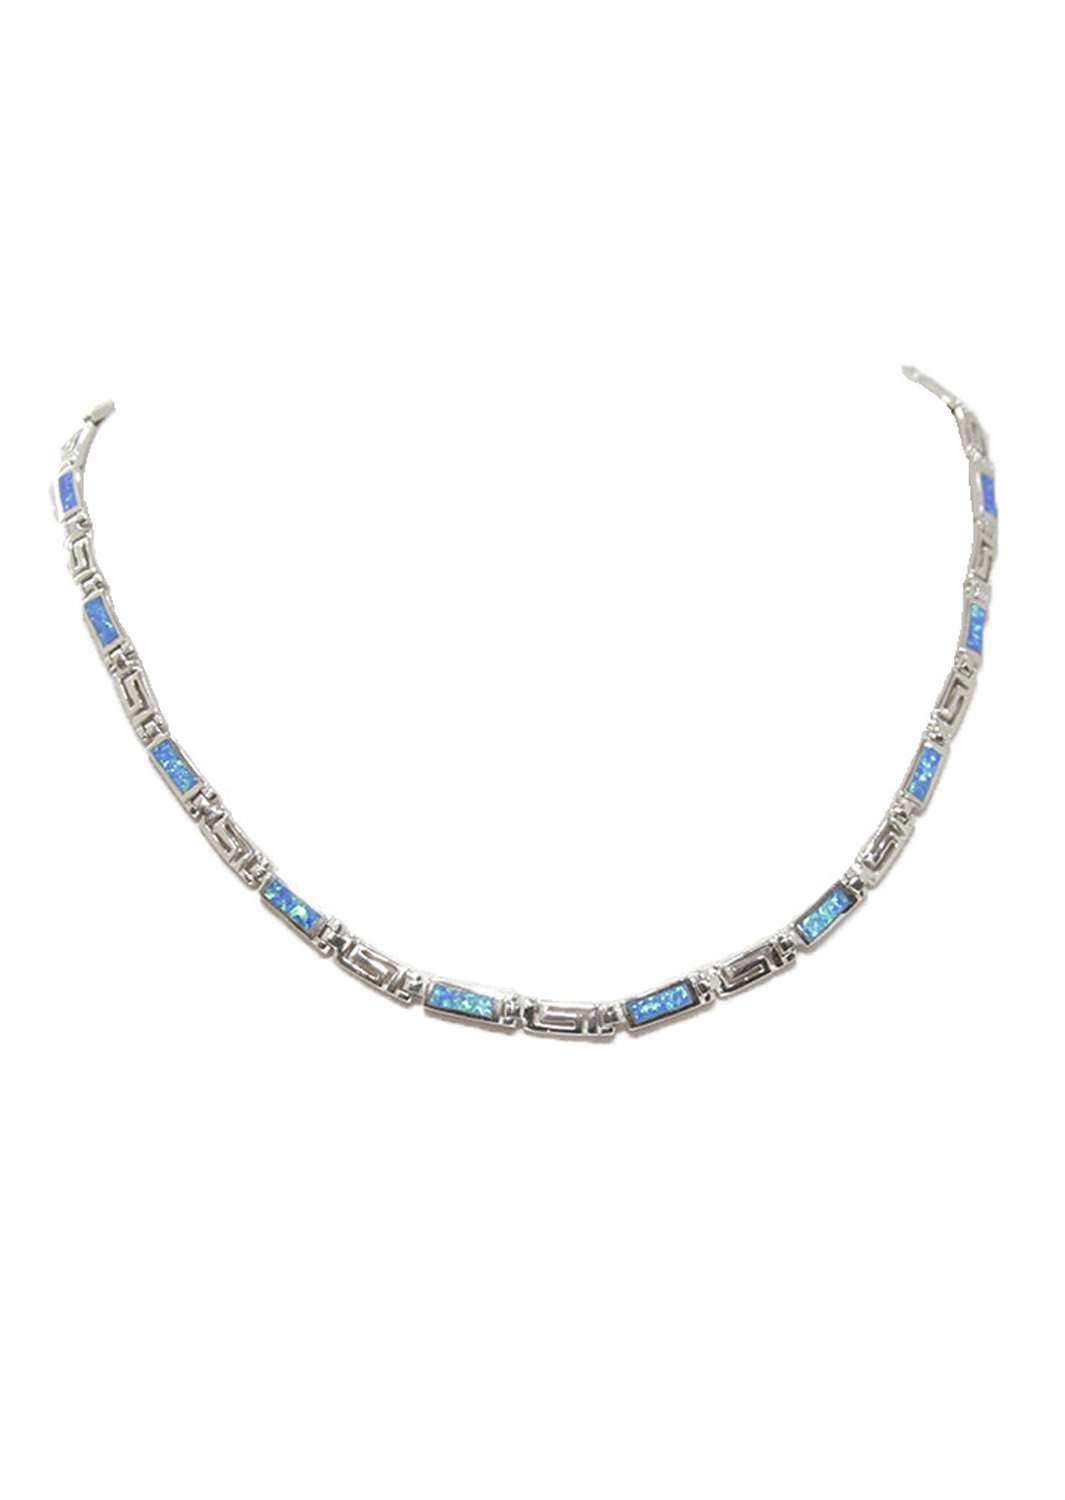 Silver necklace with Meander - Greek key design and opal gemstones 